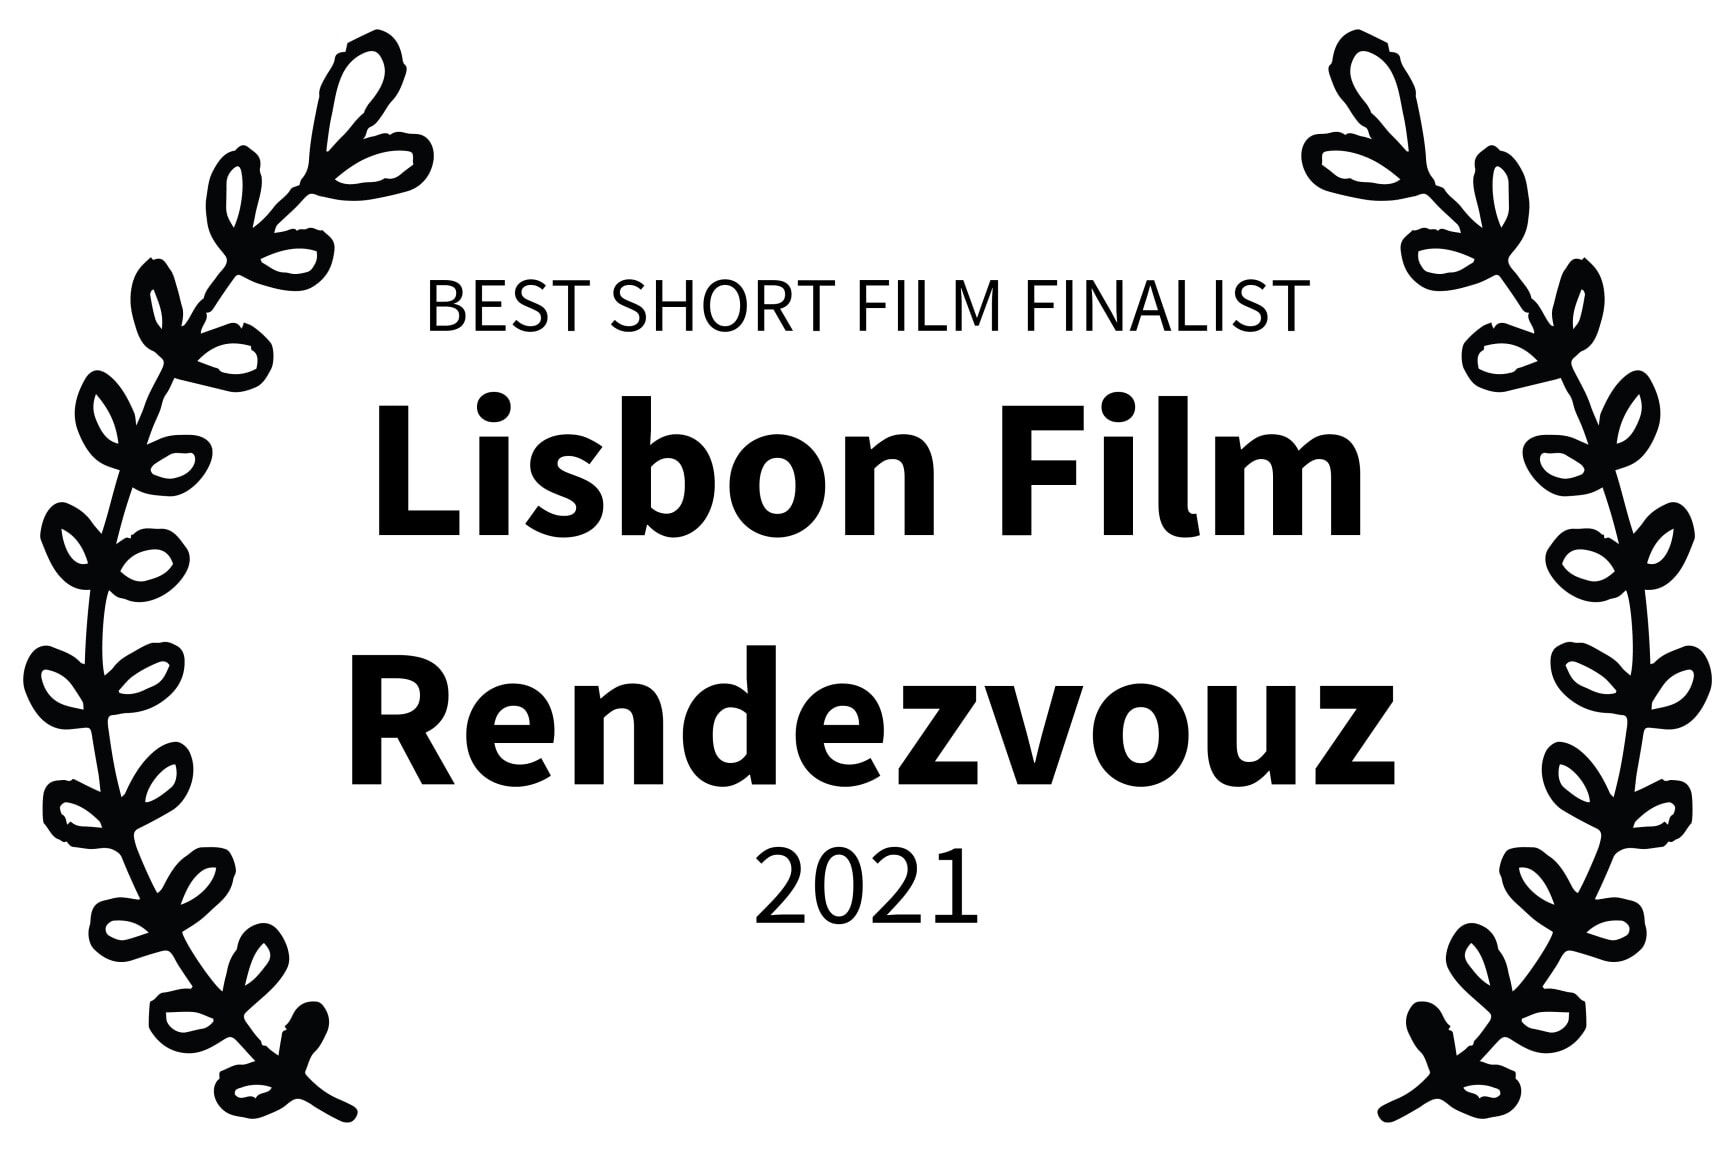 BEST SHORT FILM FINALIST - Lisbon Film Rendezvouz - 2021